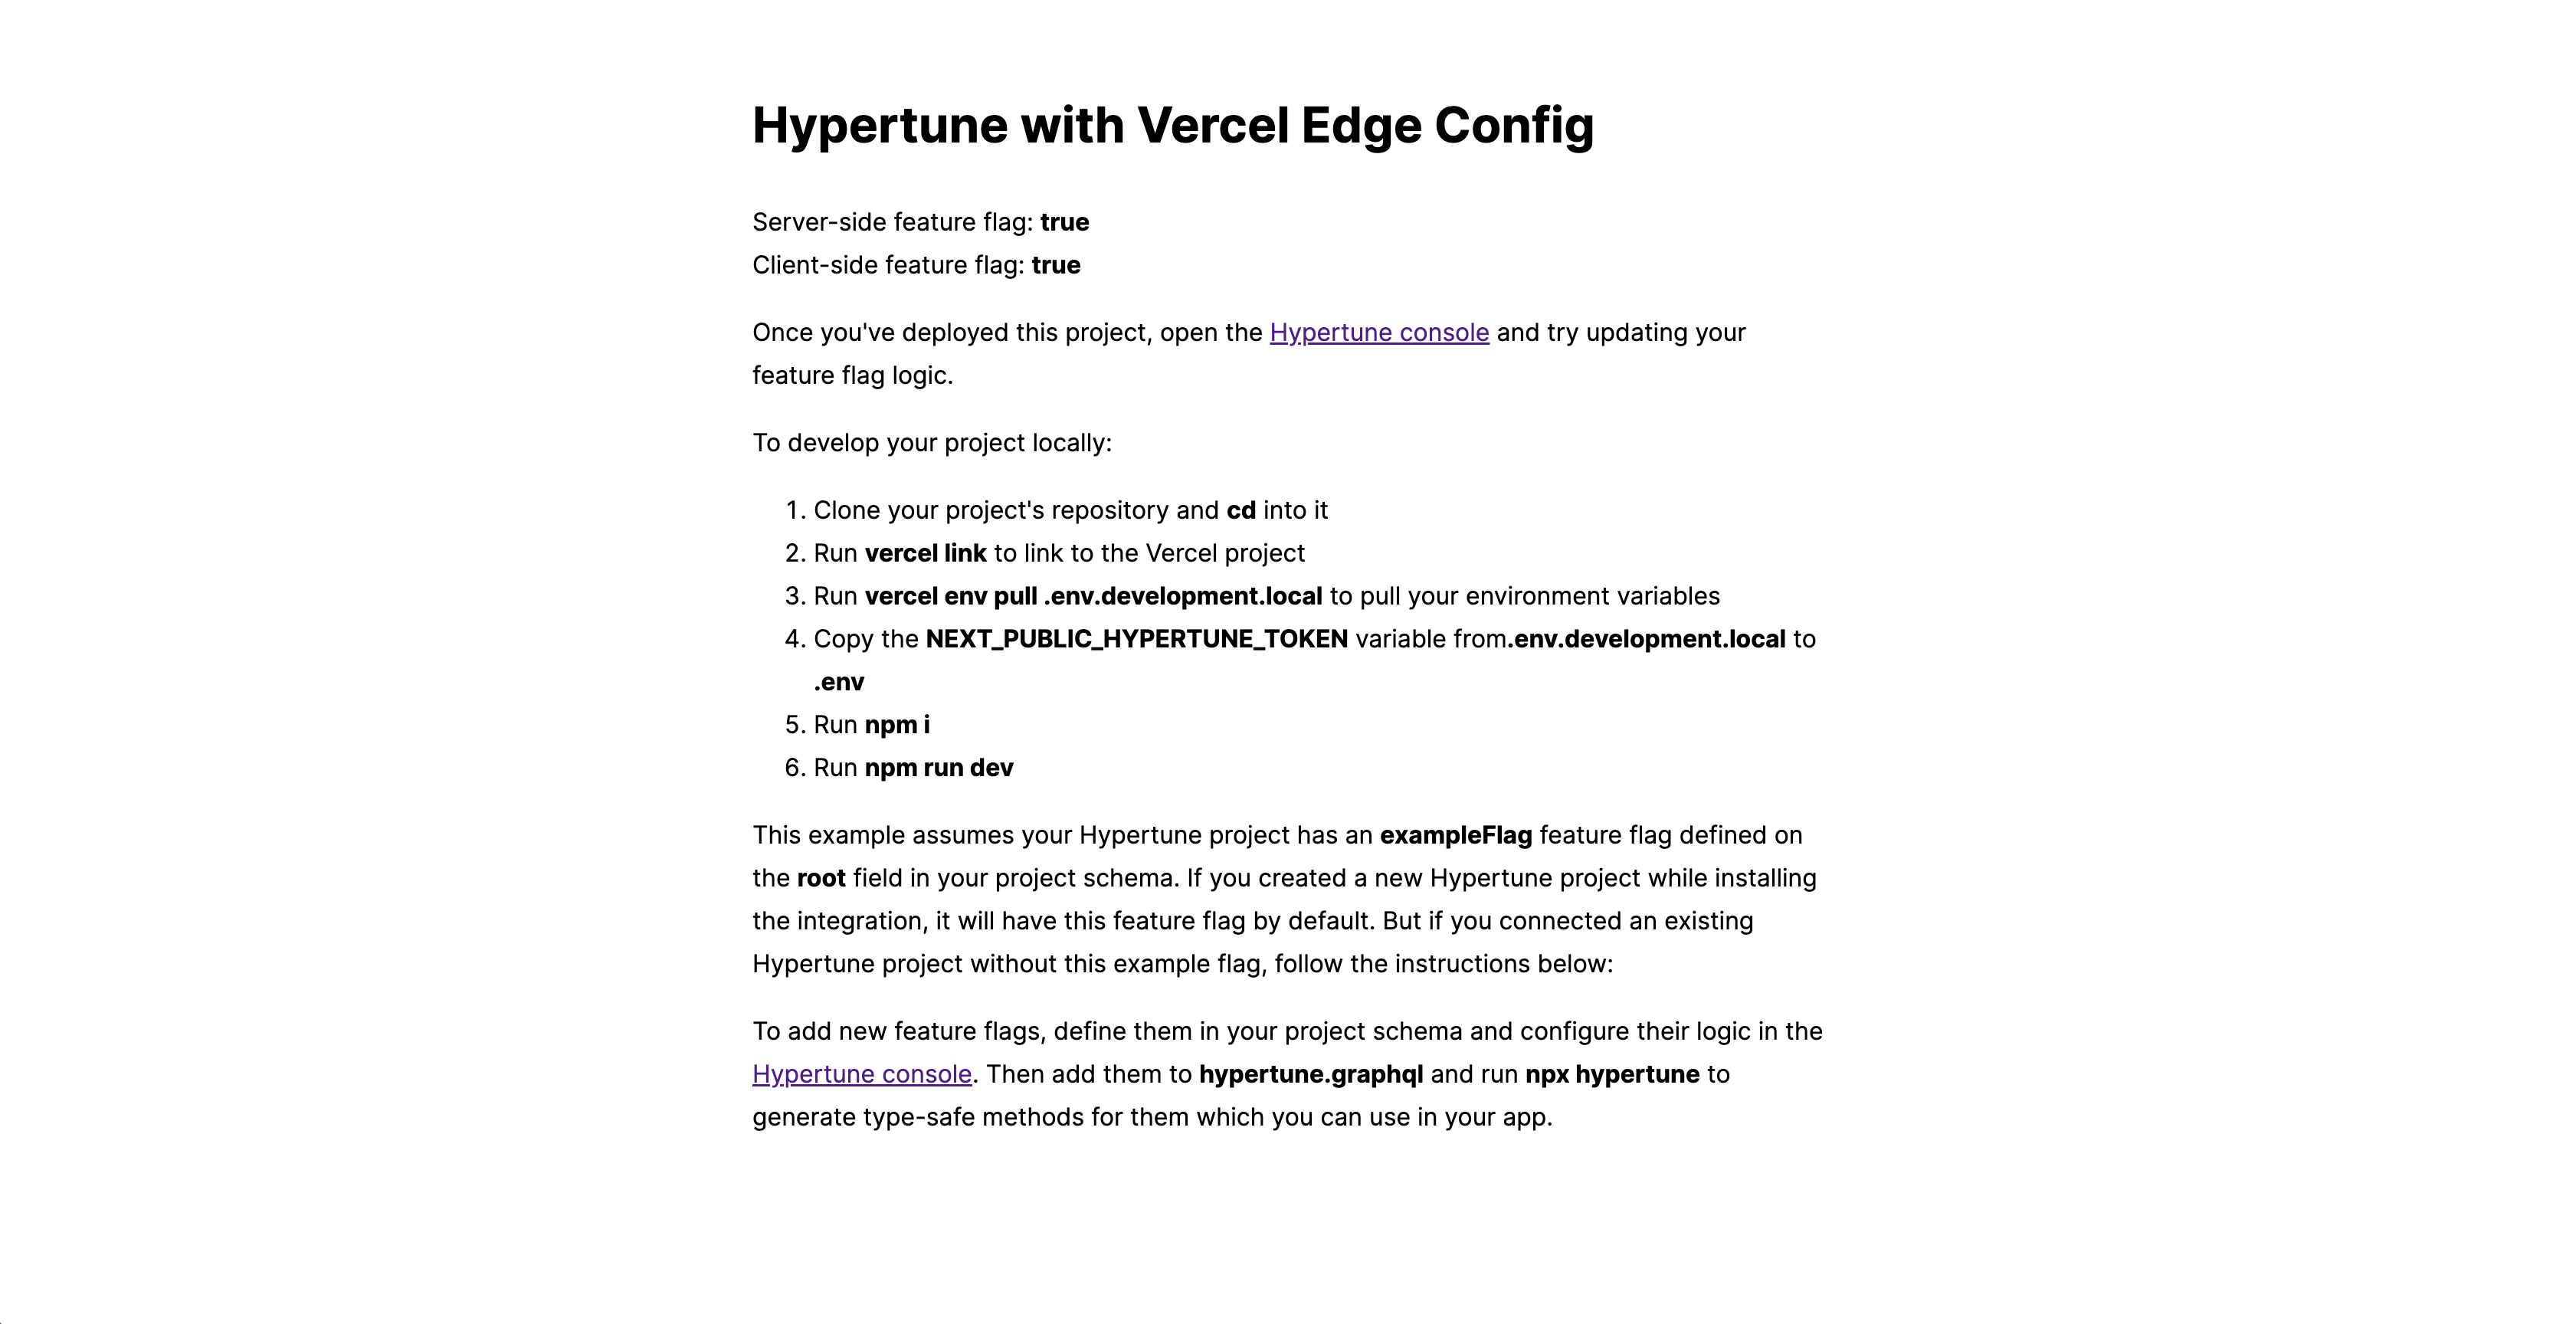 Demo of Hypertune with Vercel